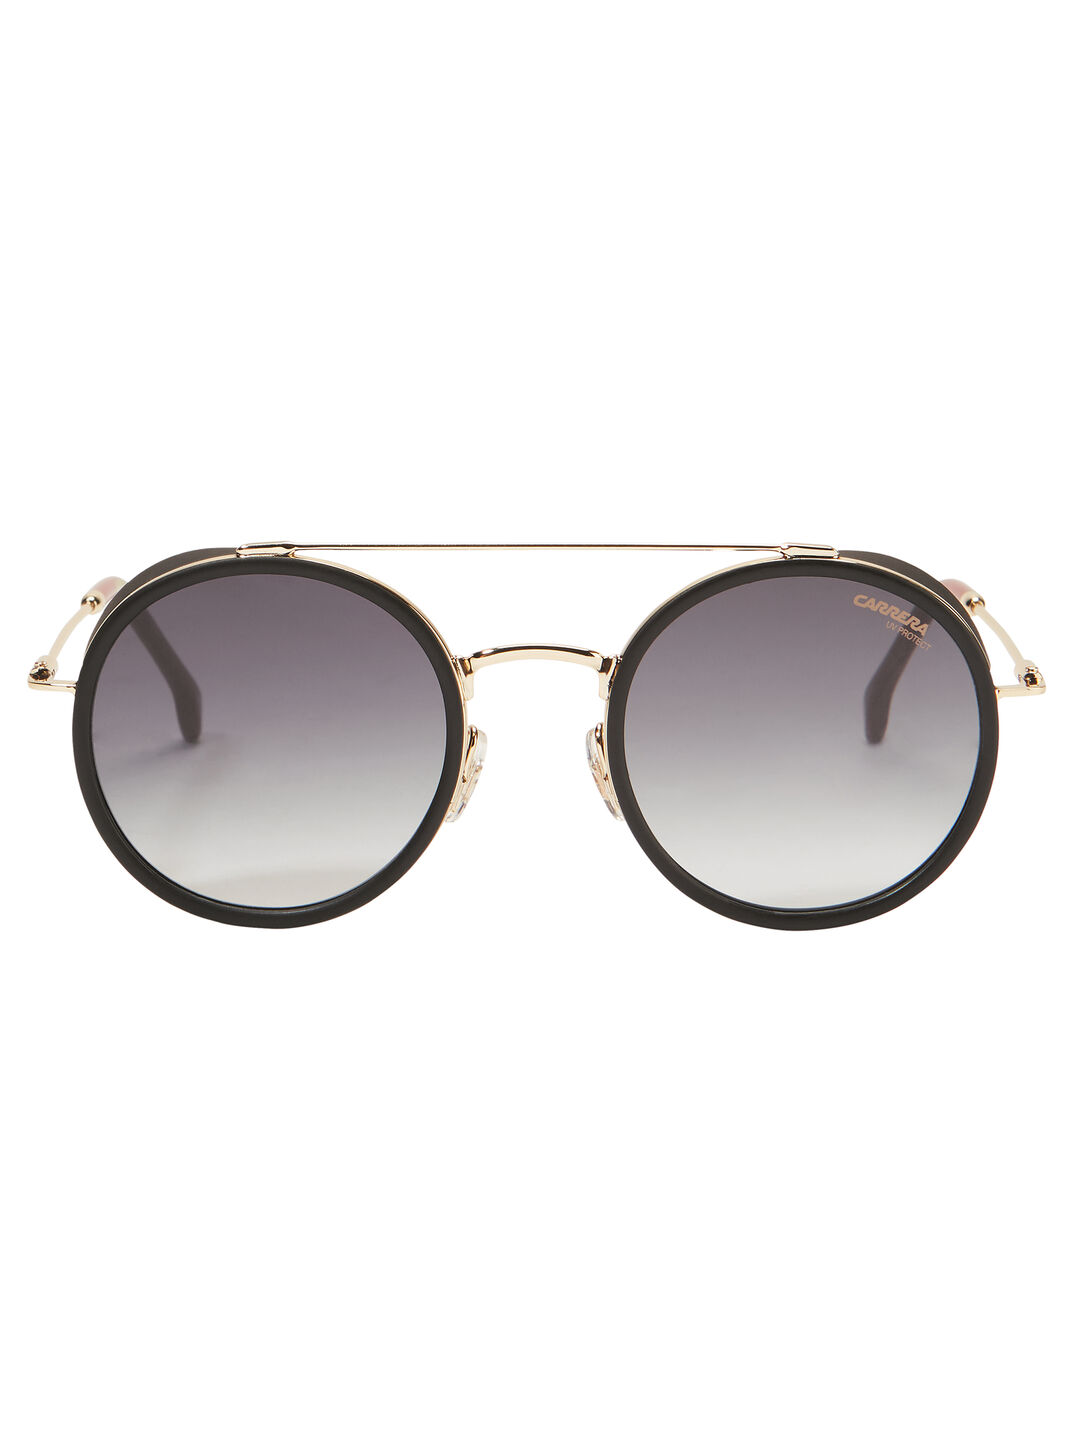 Gold Round Sunglasses - Carrera